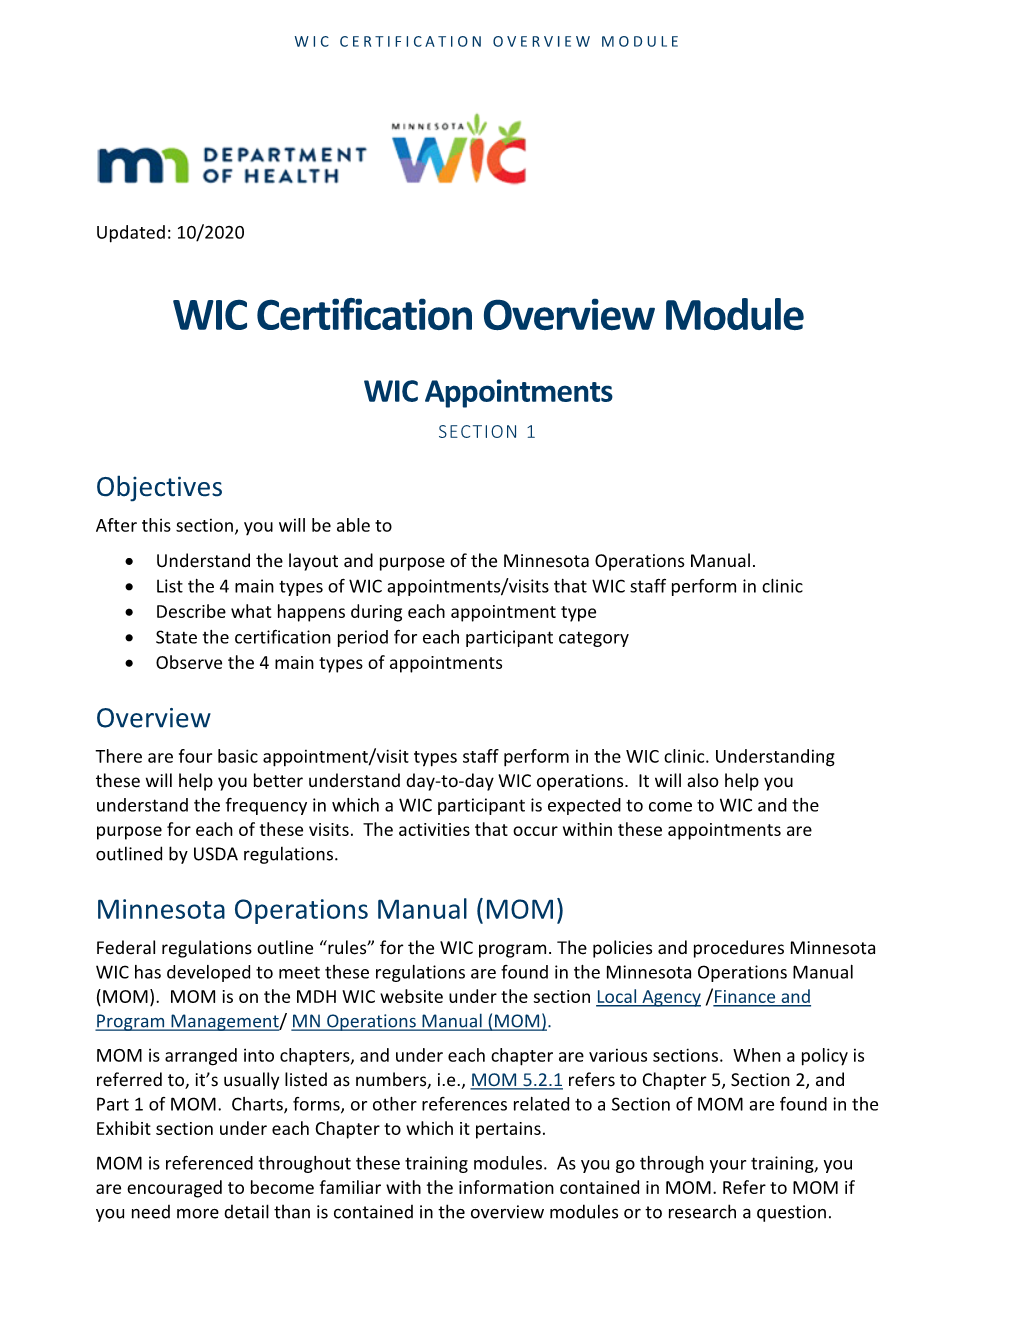 Wic Certification Overview Module